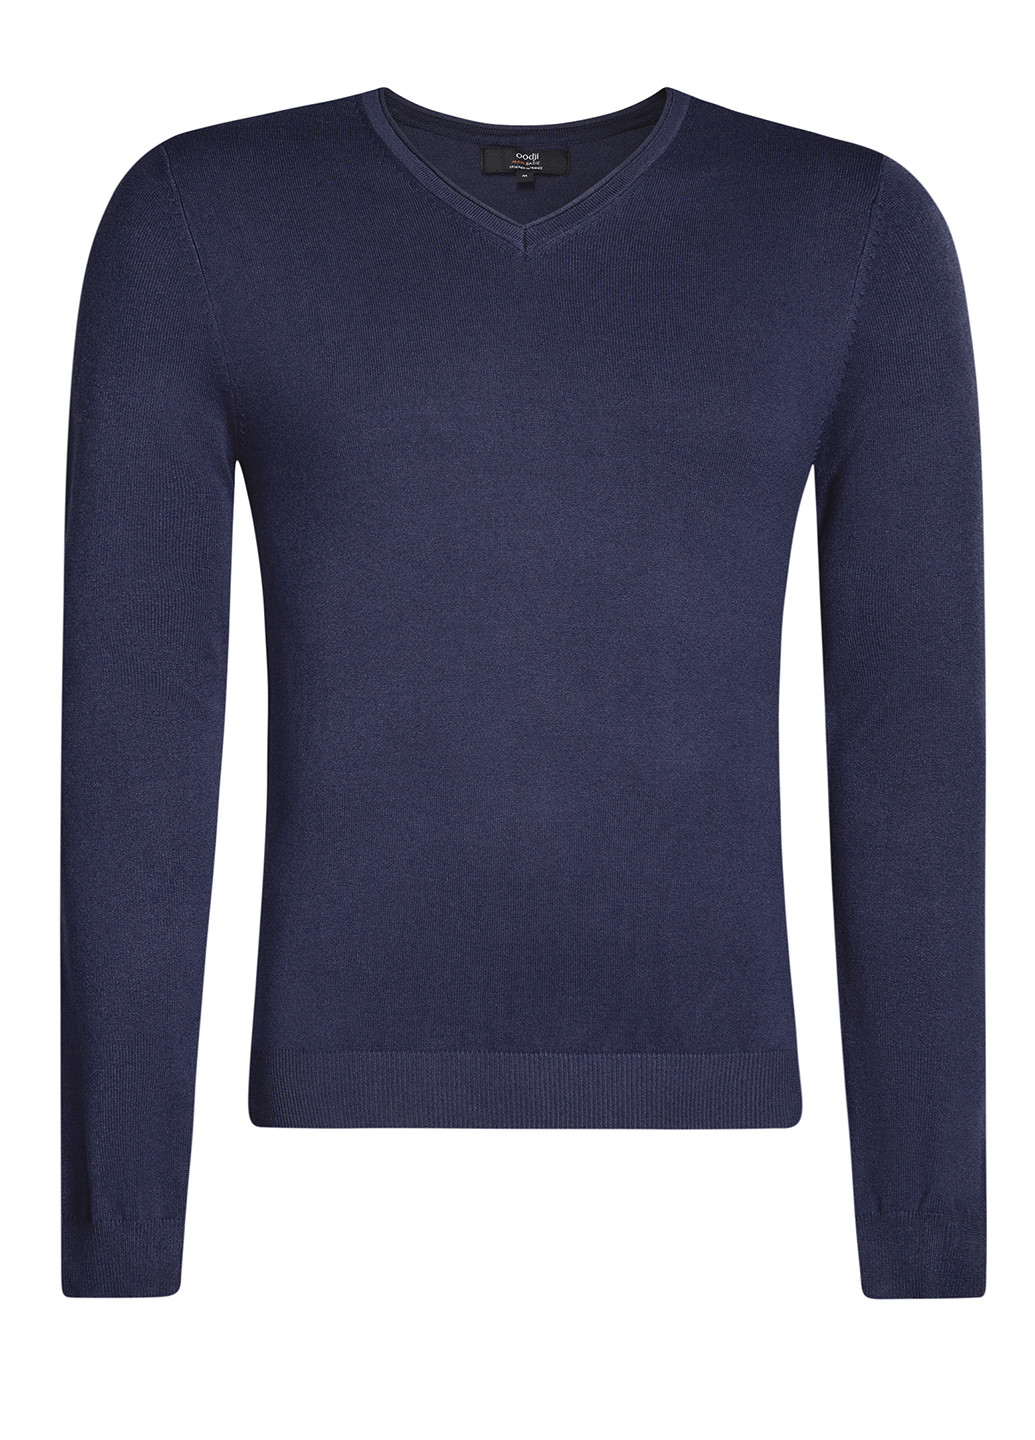 Синий демисезонный пуловер пуловер Oodji